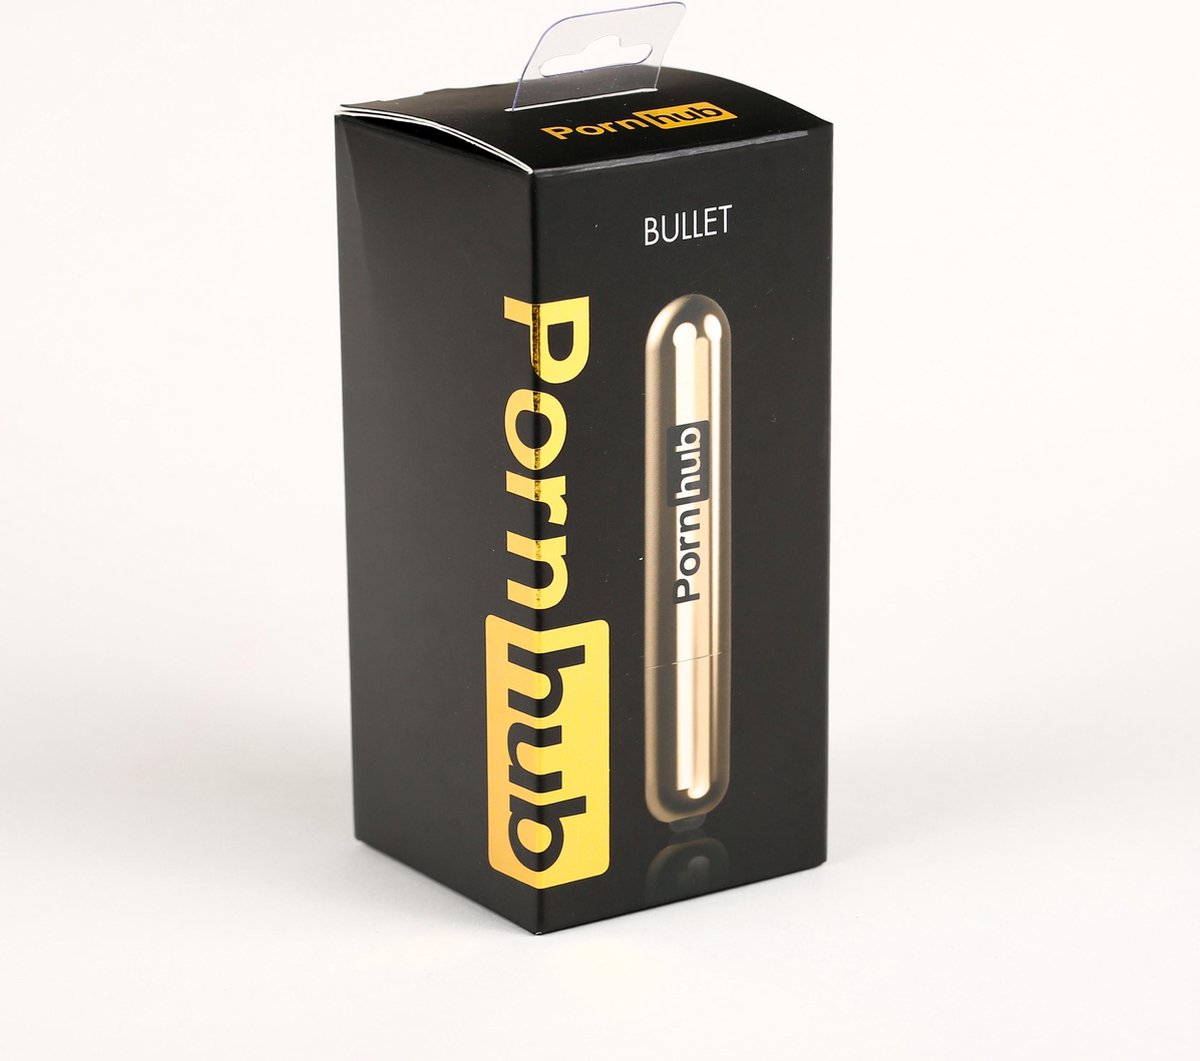 Pornhub - Bullet Vibrating & Rechargeable